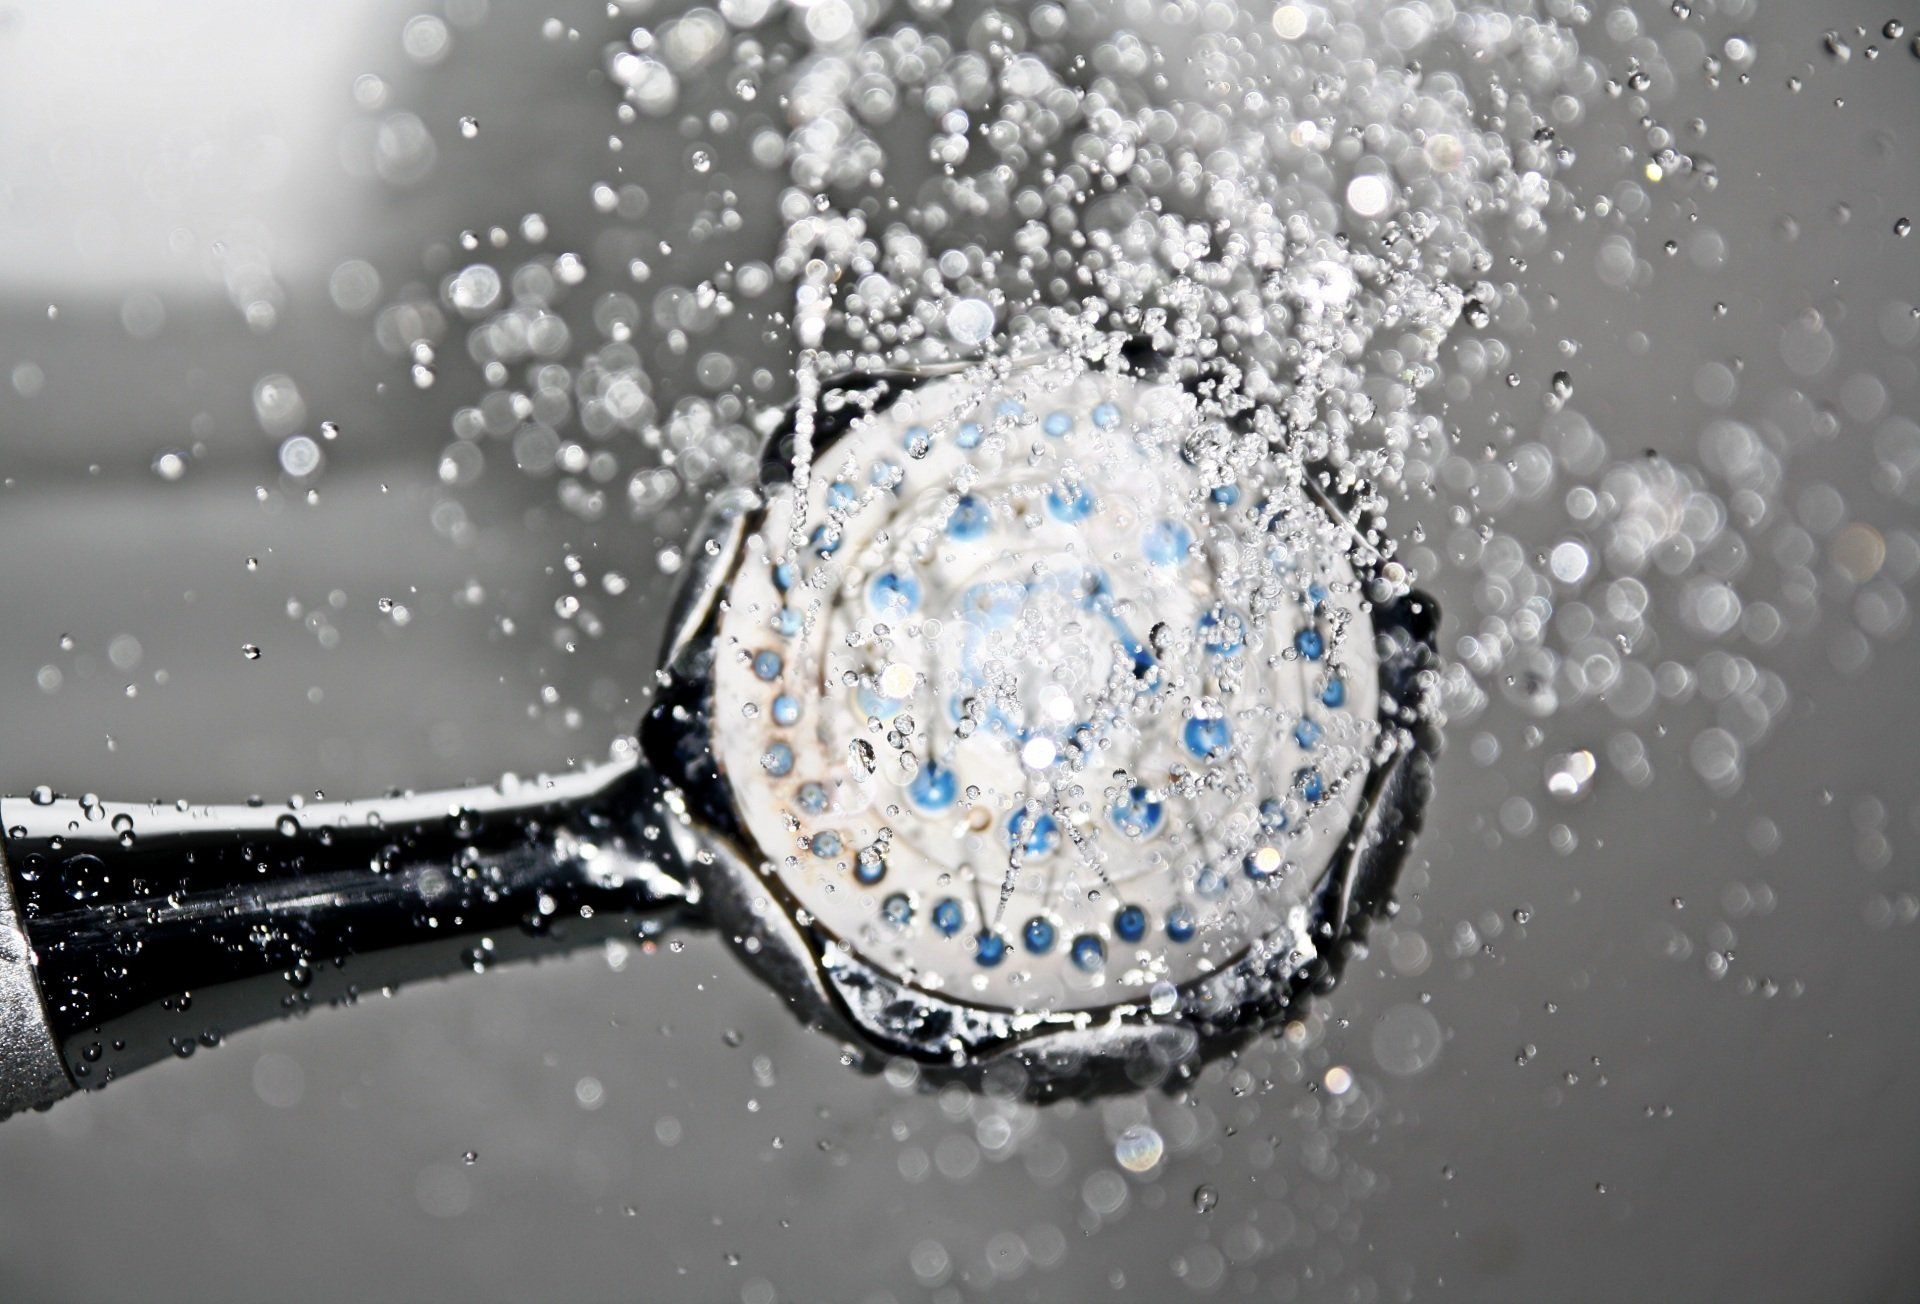 Shower head dripping water